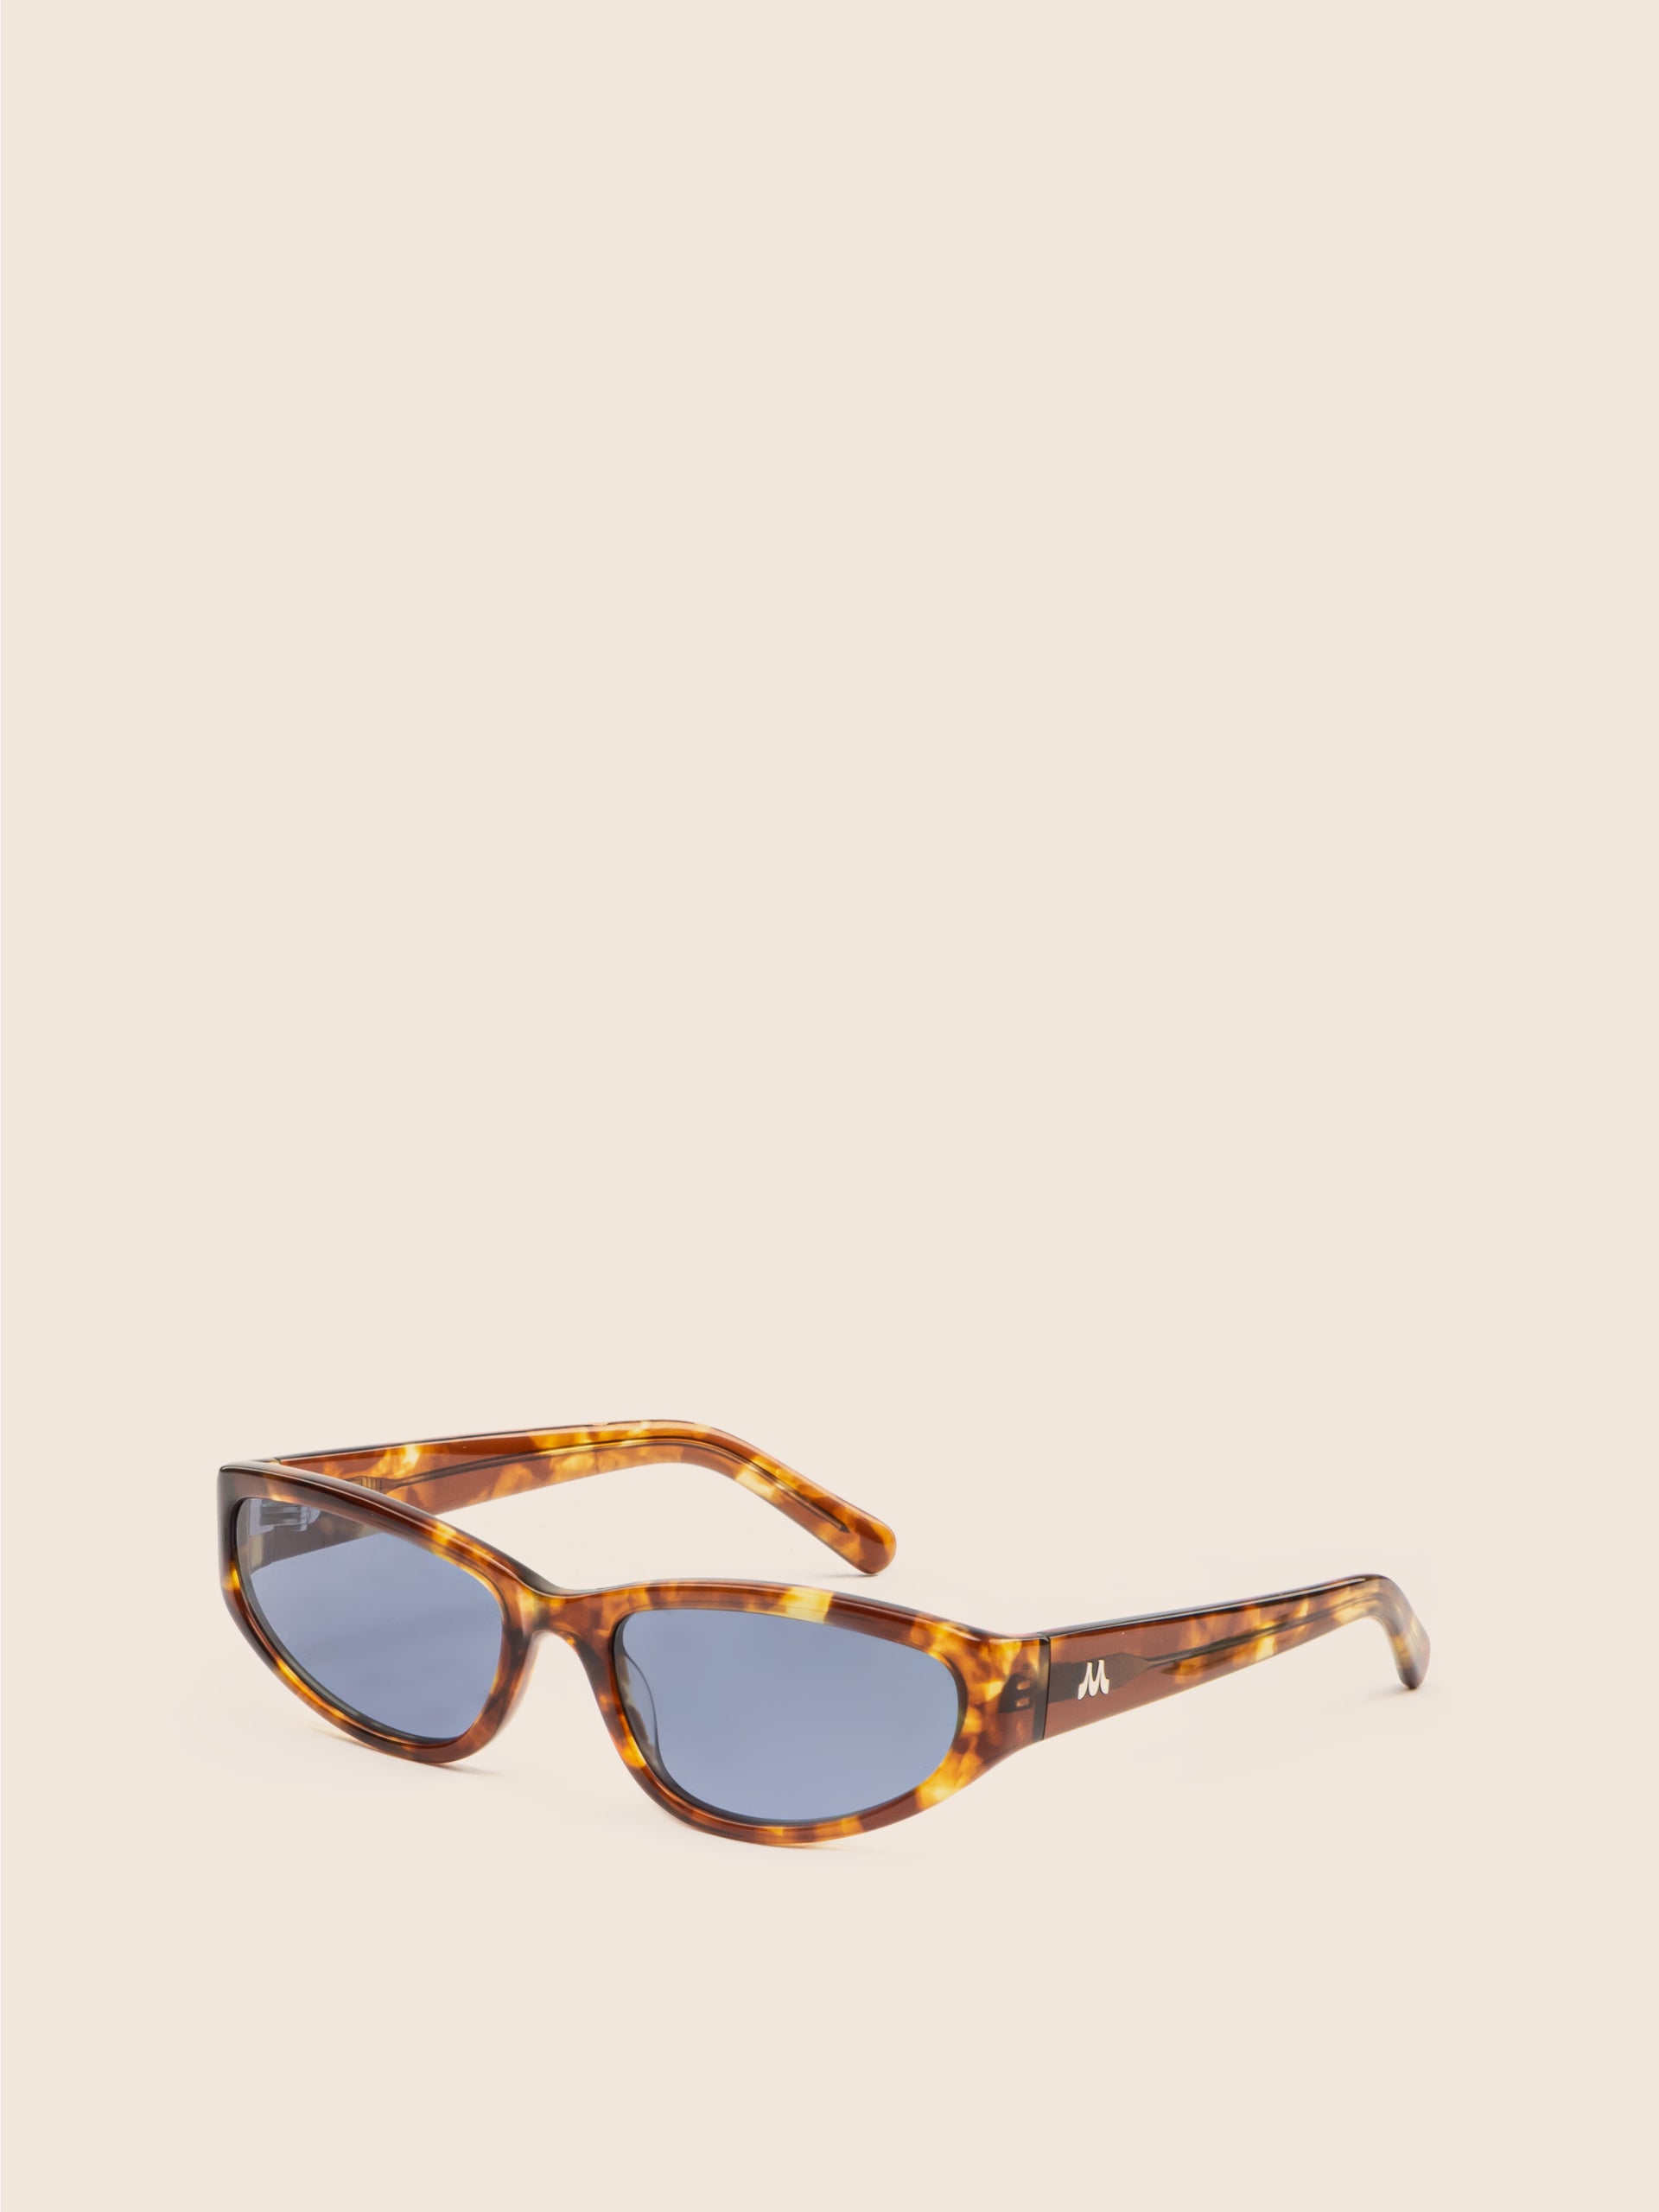 Edison Tortoise Sunglasses